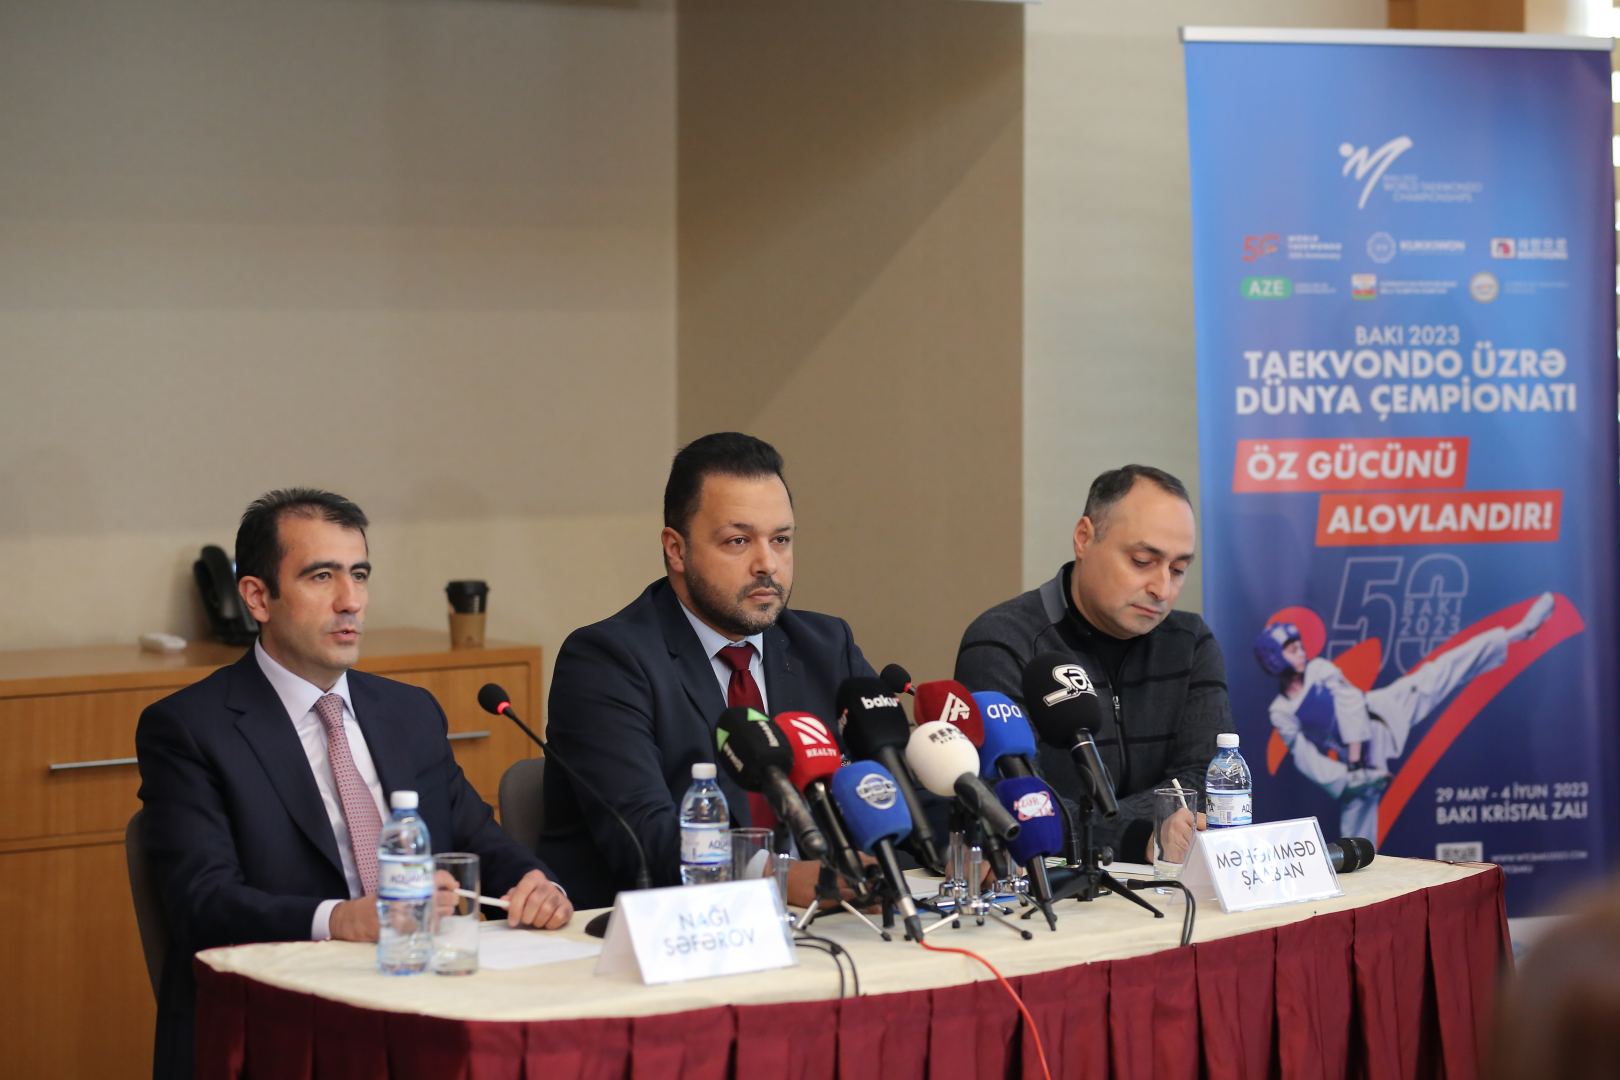 Azerbaijan's Baku to host 2023 World Taekwondo Championships (PHOTO)